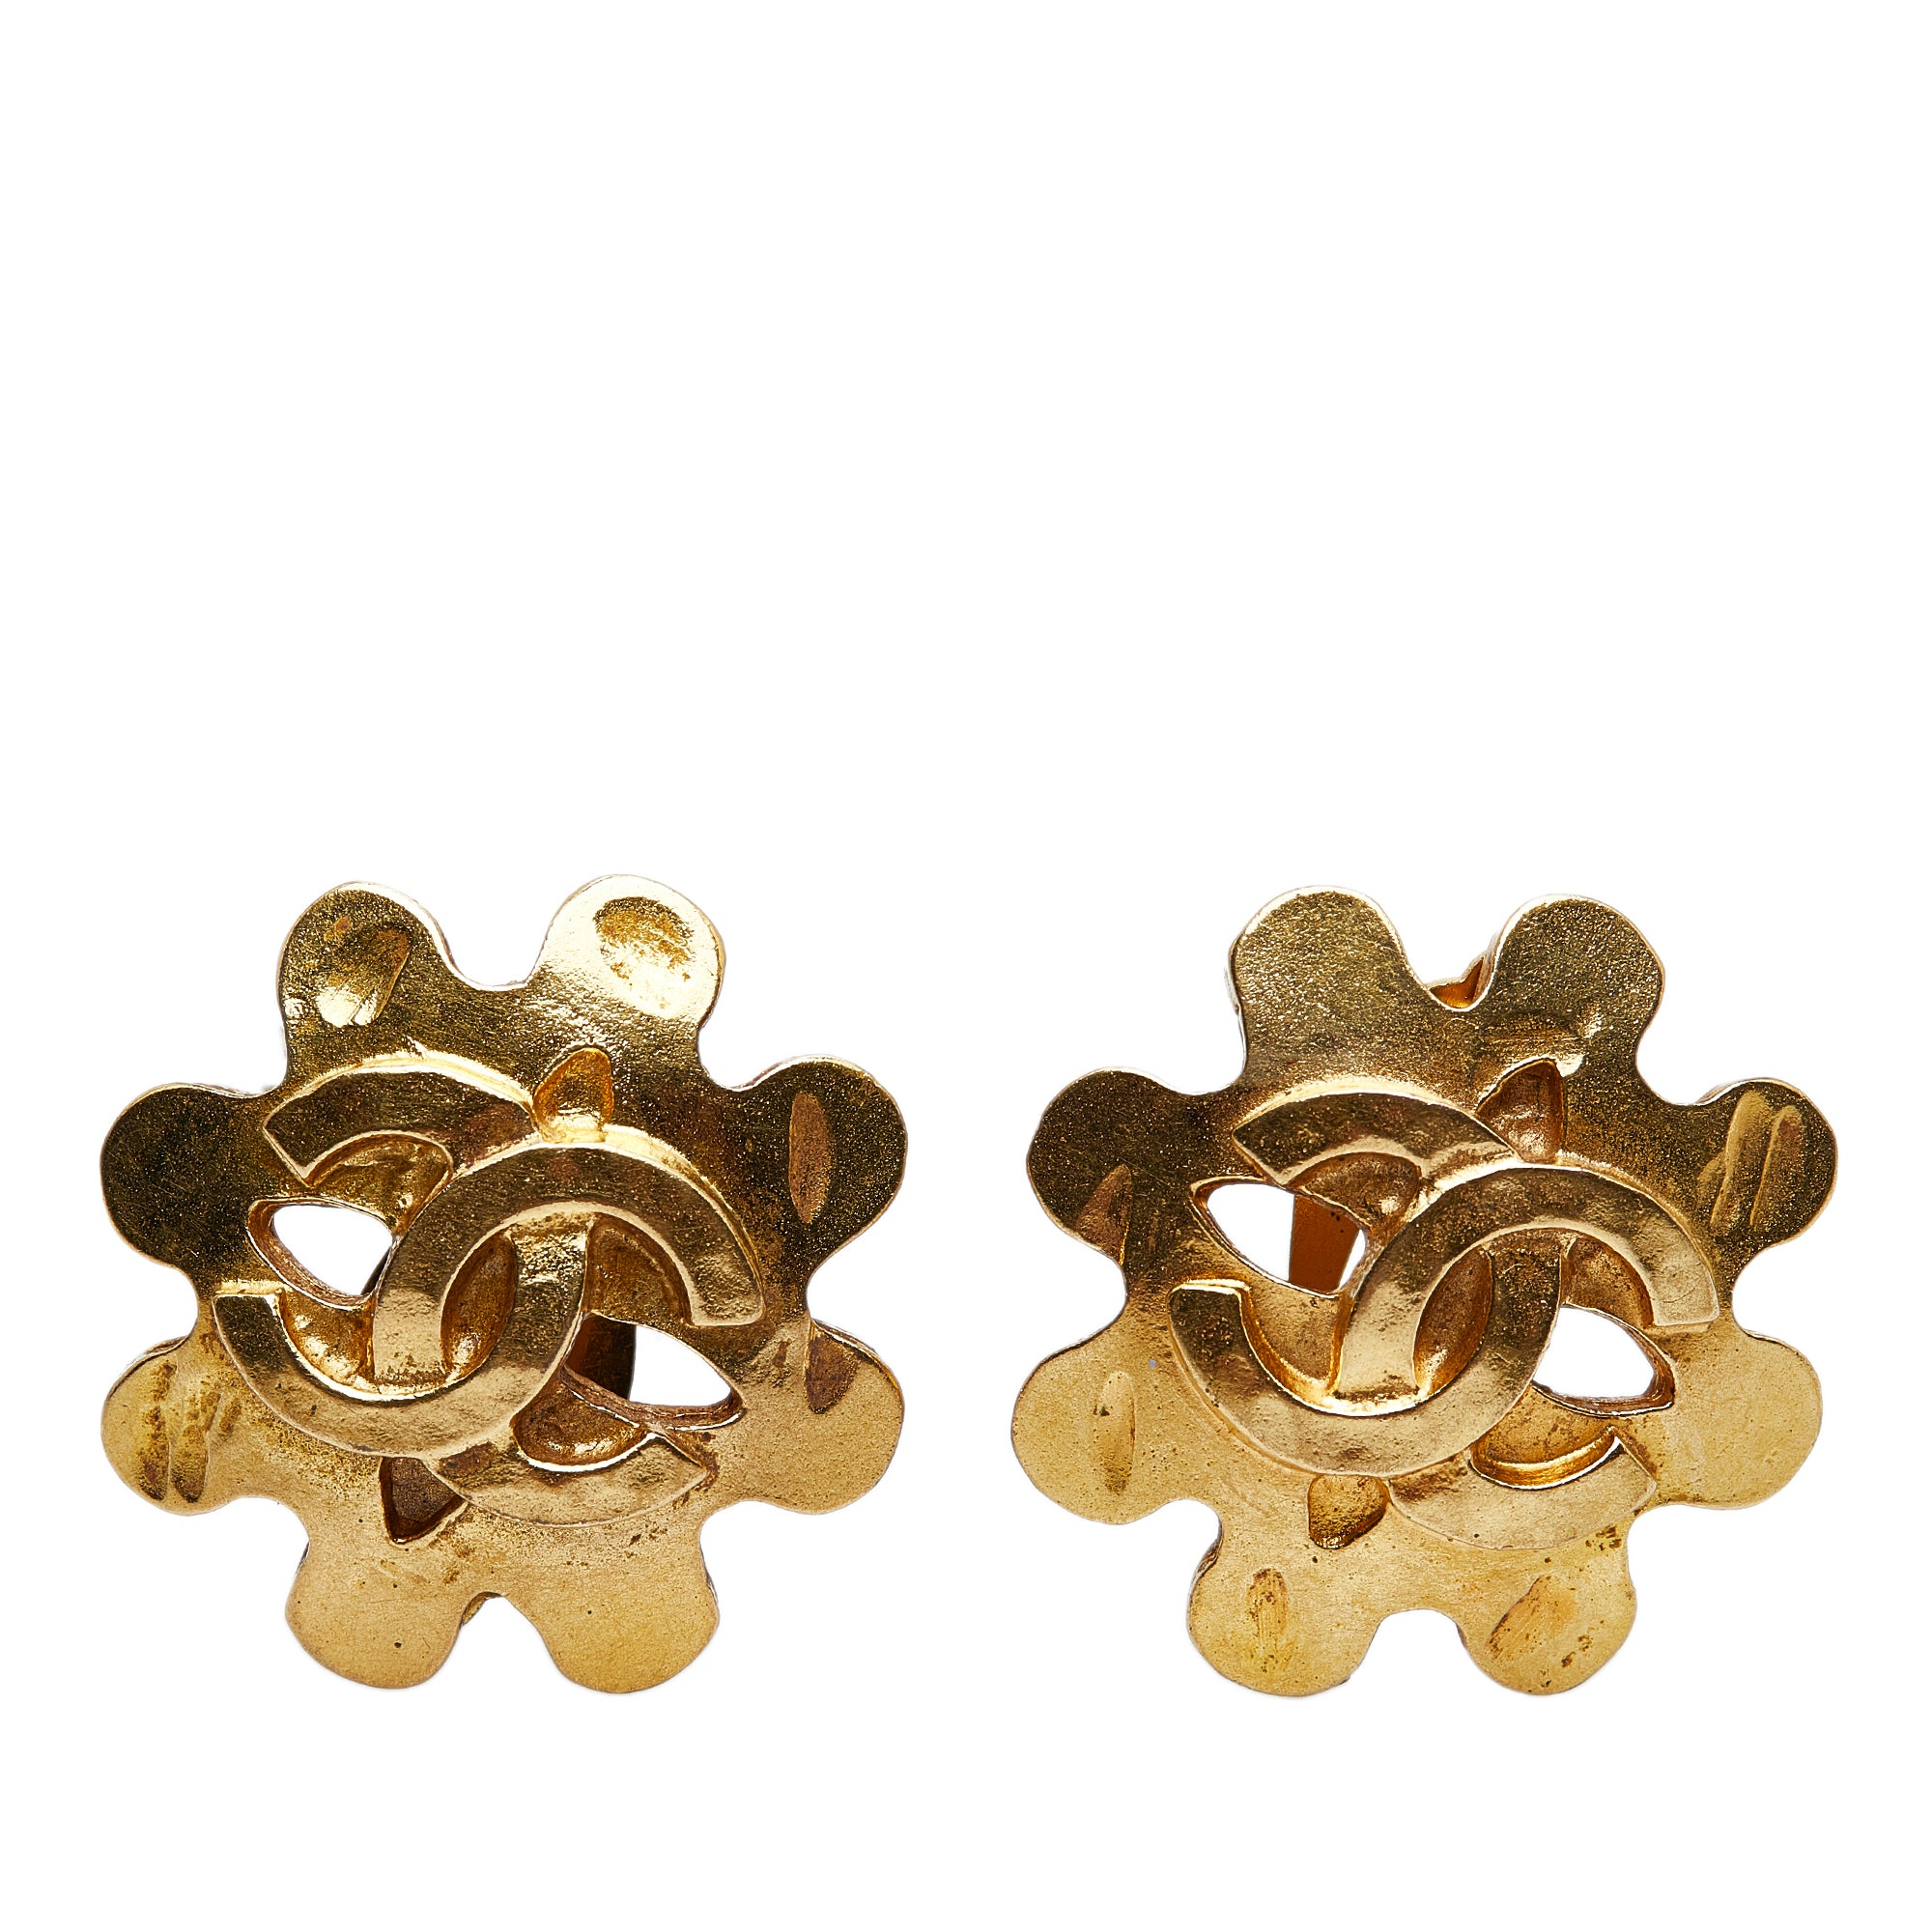 Chanel crystal cc earrings - Gem